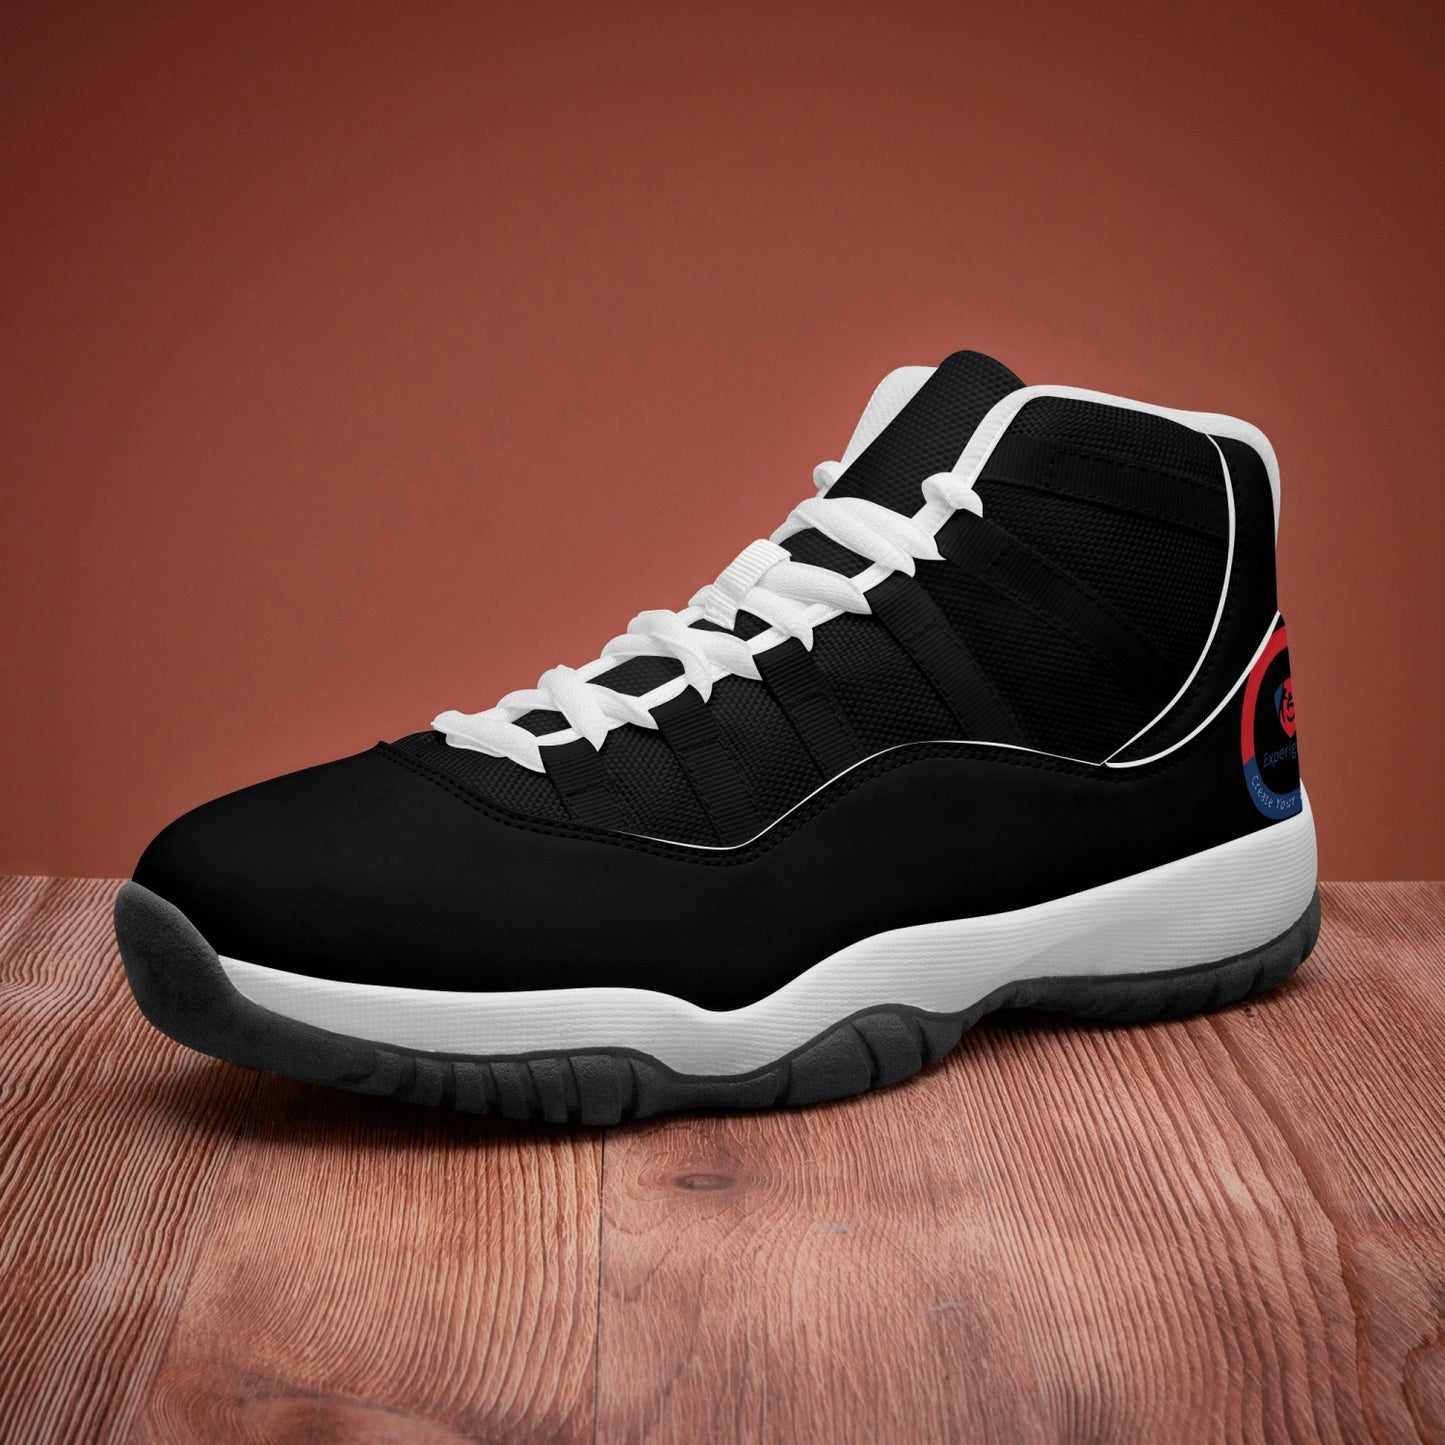 AJ11 Style Basketball Sneakers